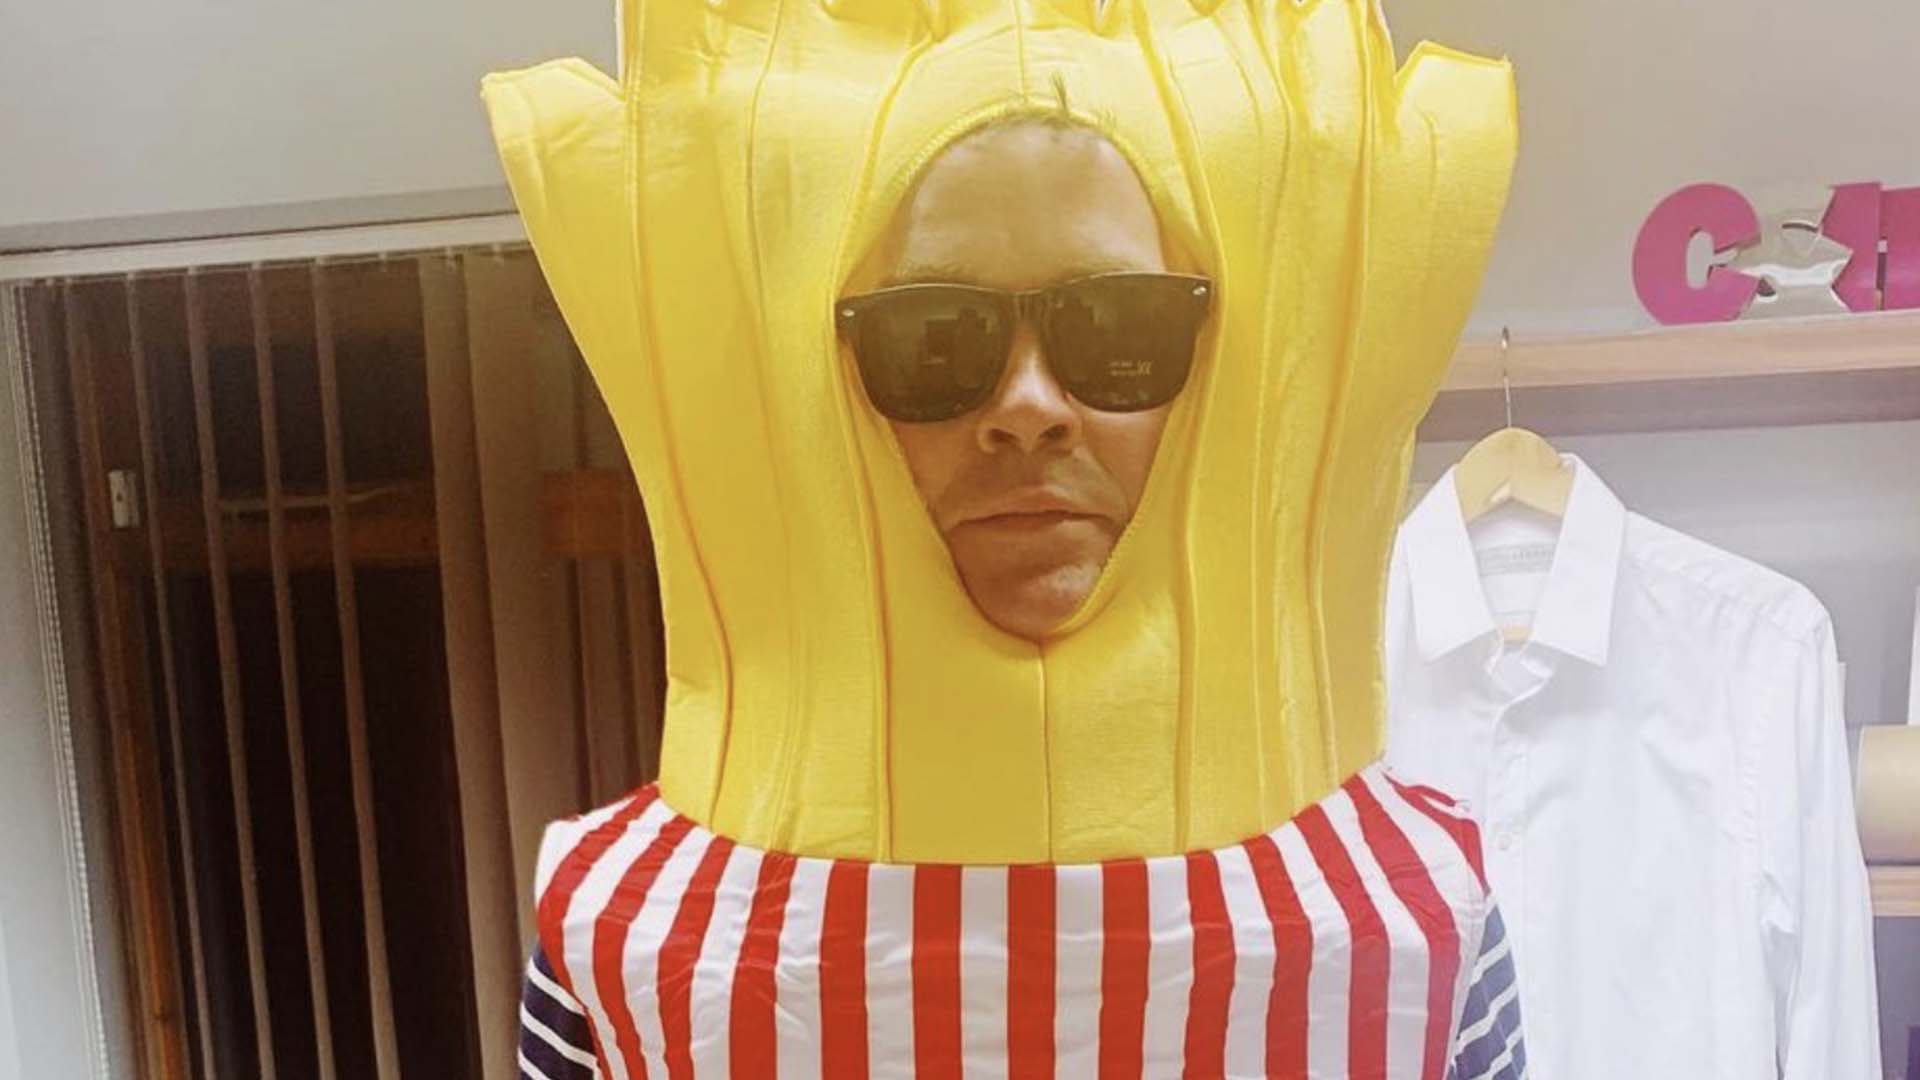 Stephen Mulhern dressed as a packet of fries